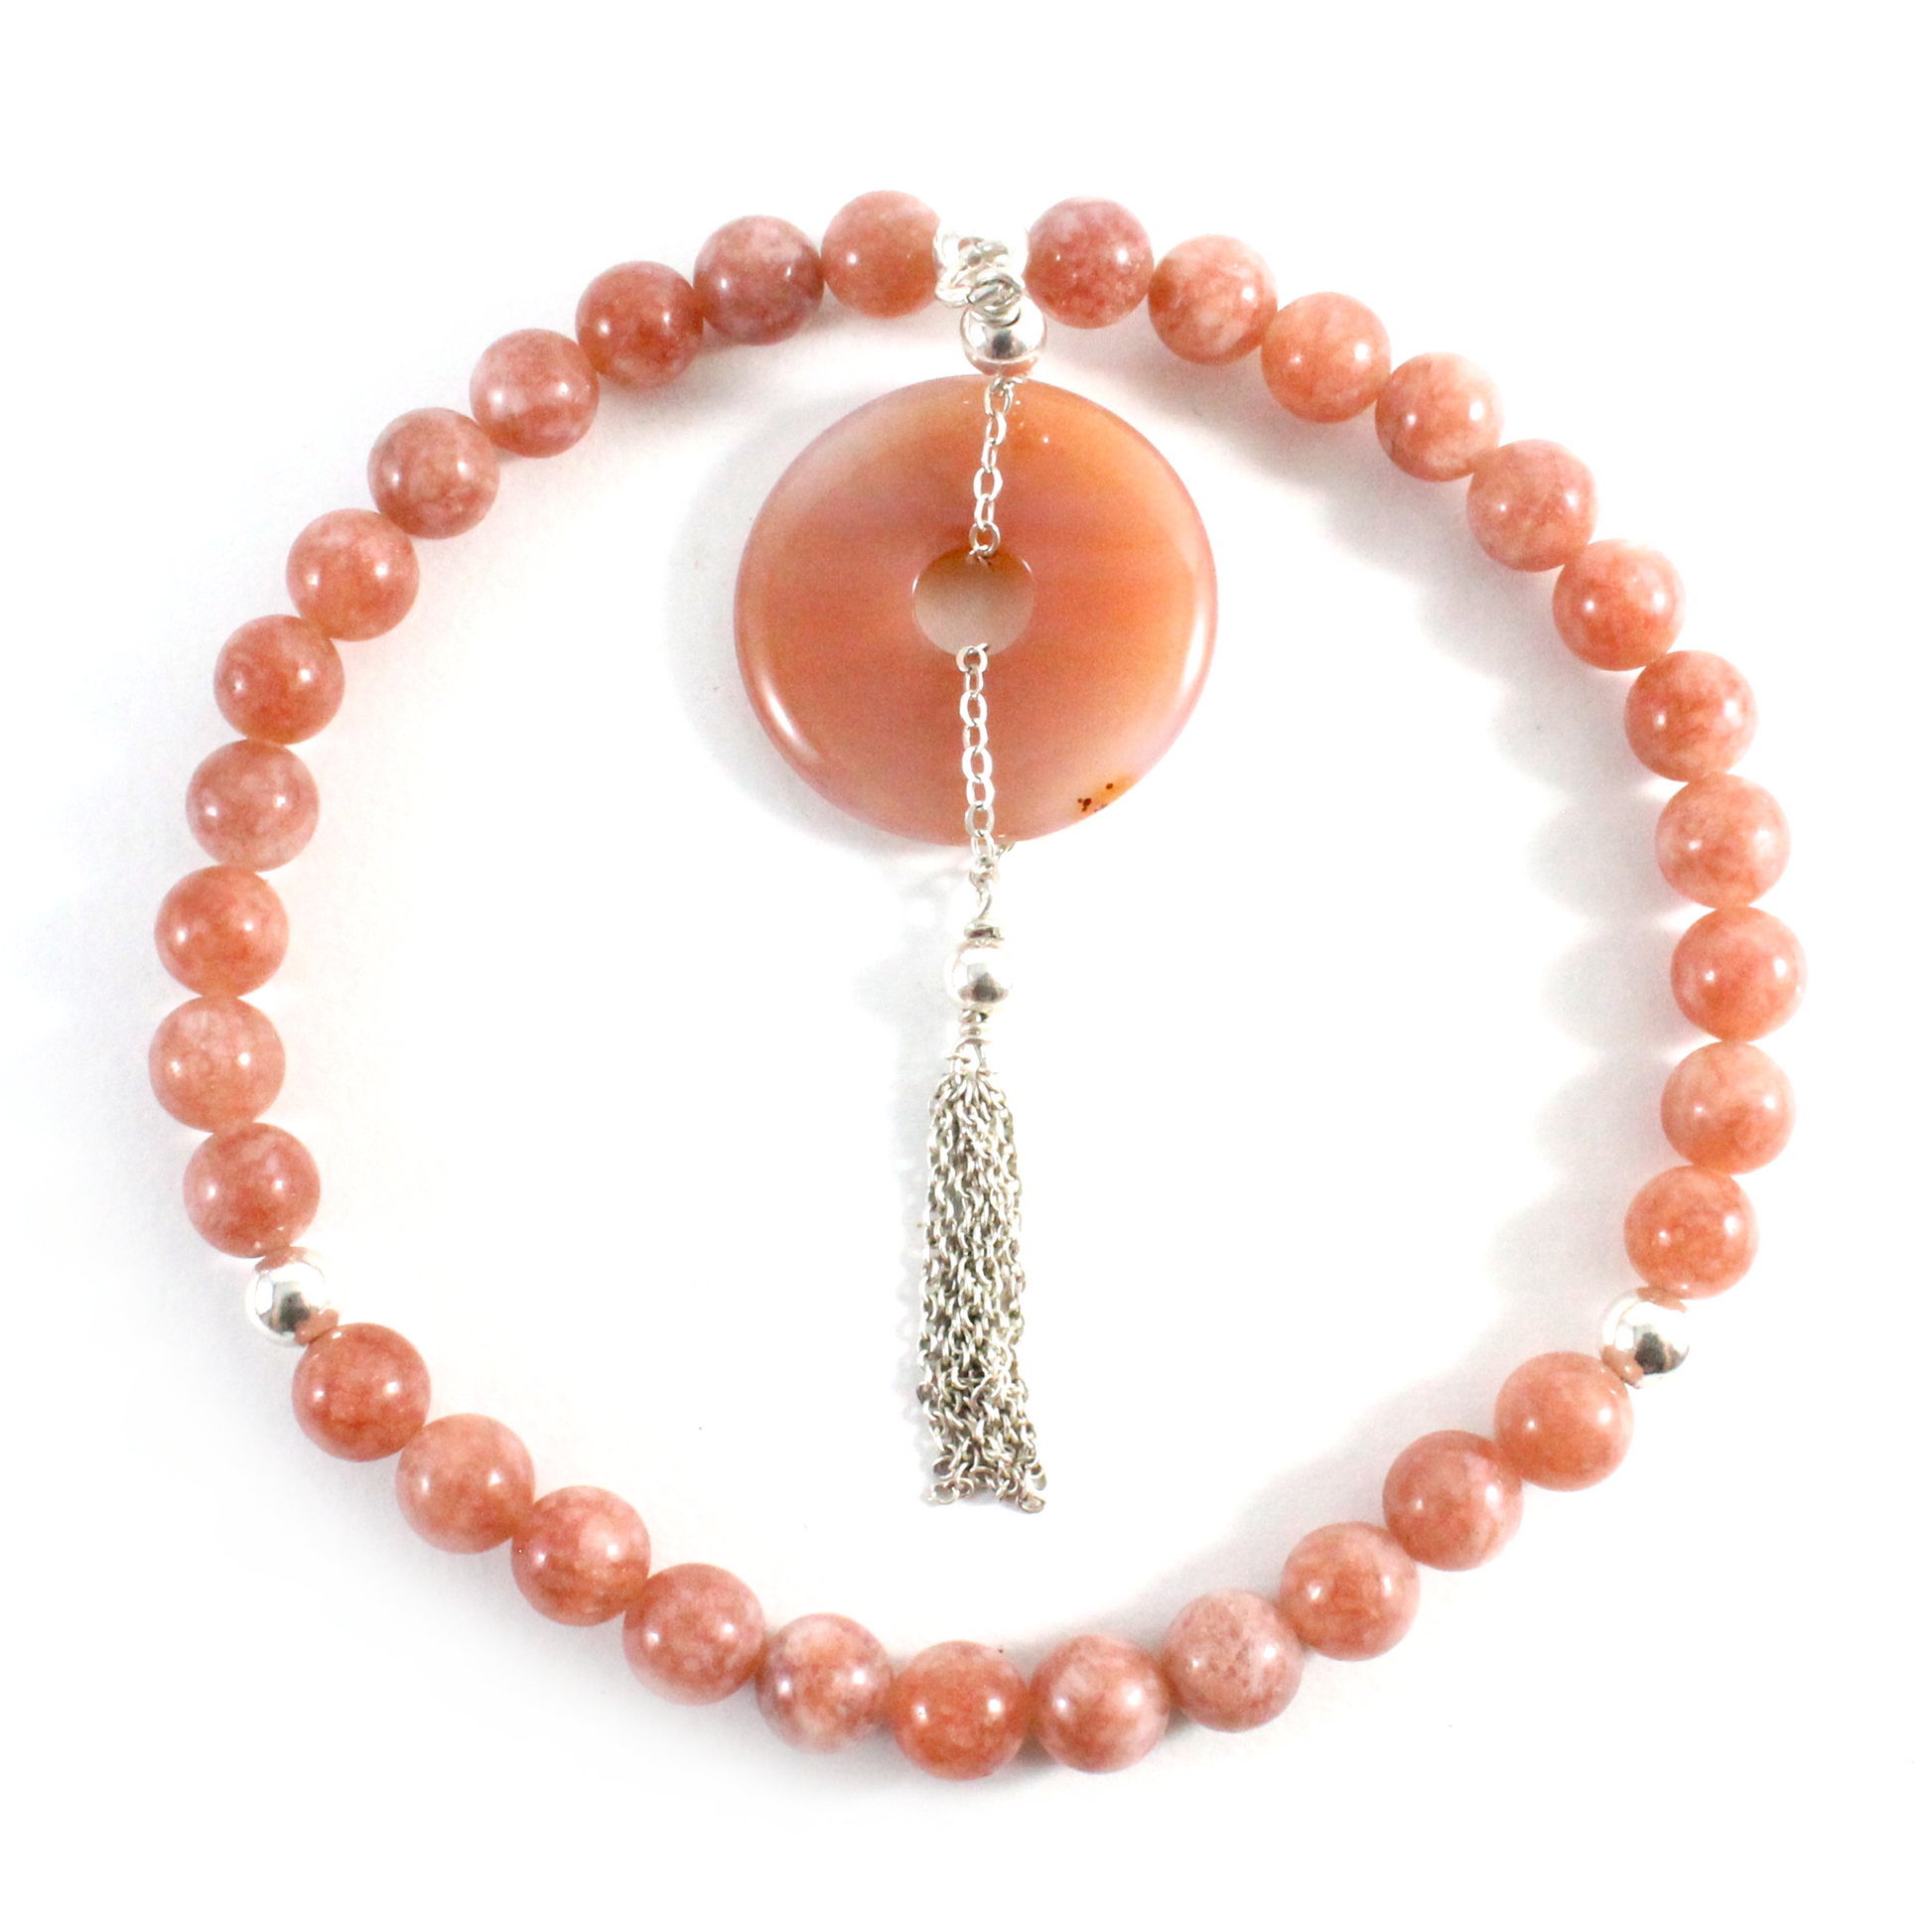 3-in-1 Sunstone Necklace/Bracelet/Prayer beads -The Ricci District